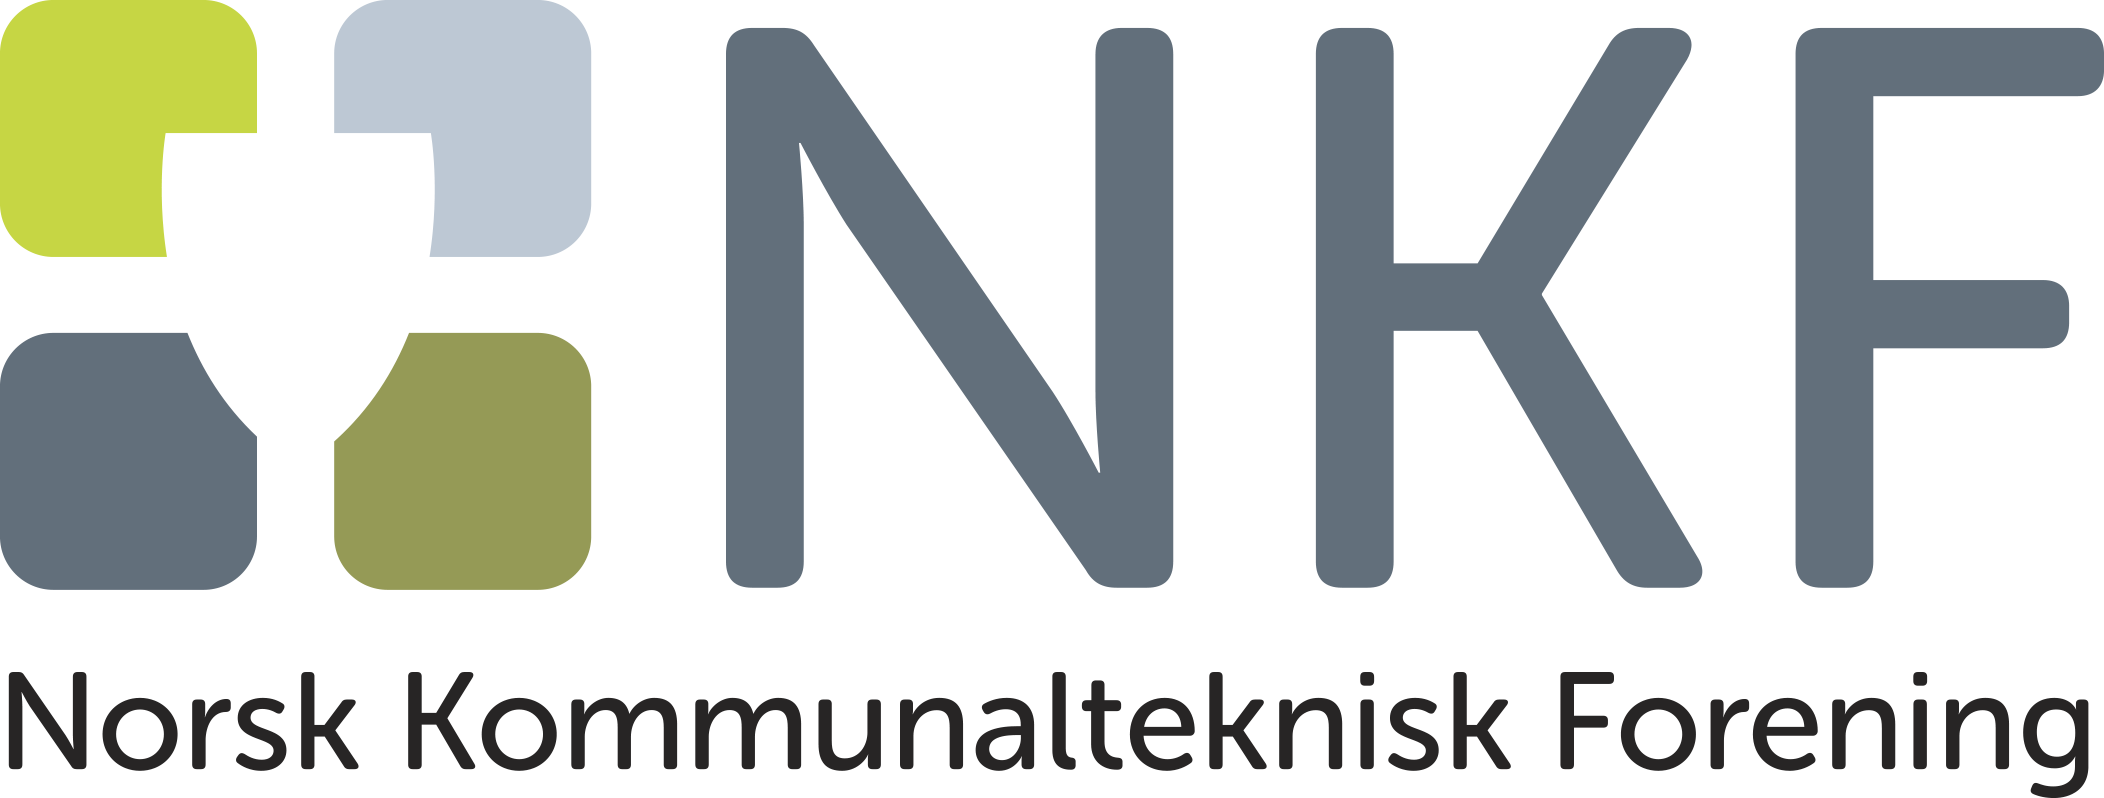 Norsk Kommunalteknisk forening (NKF)